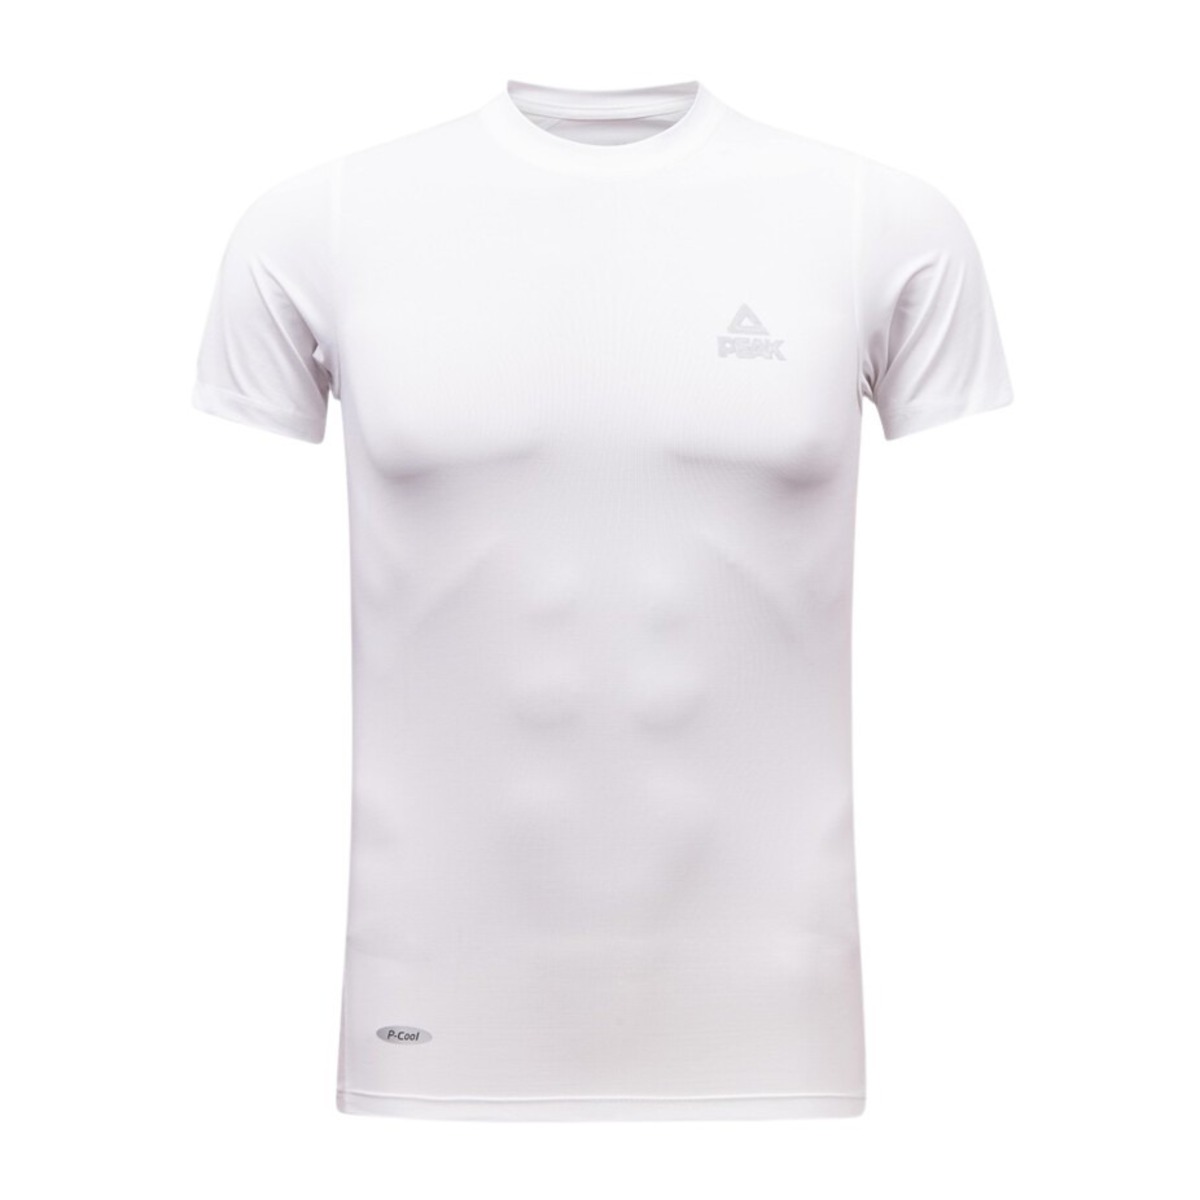 Camiseta Compresión Peak P-cool - blanco - 